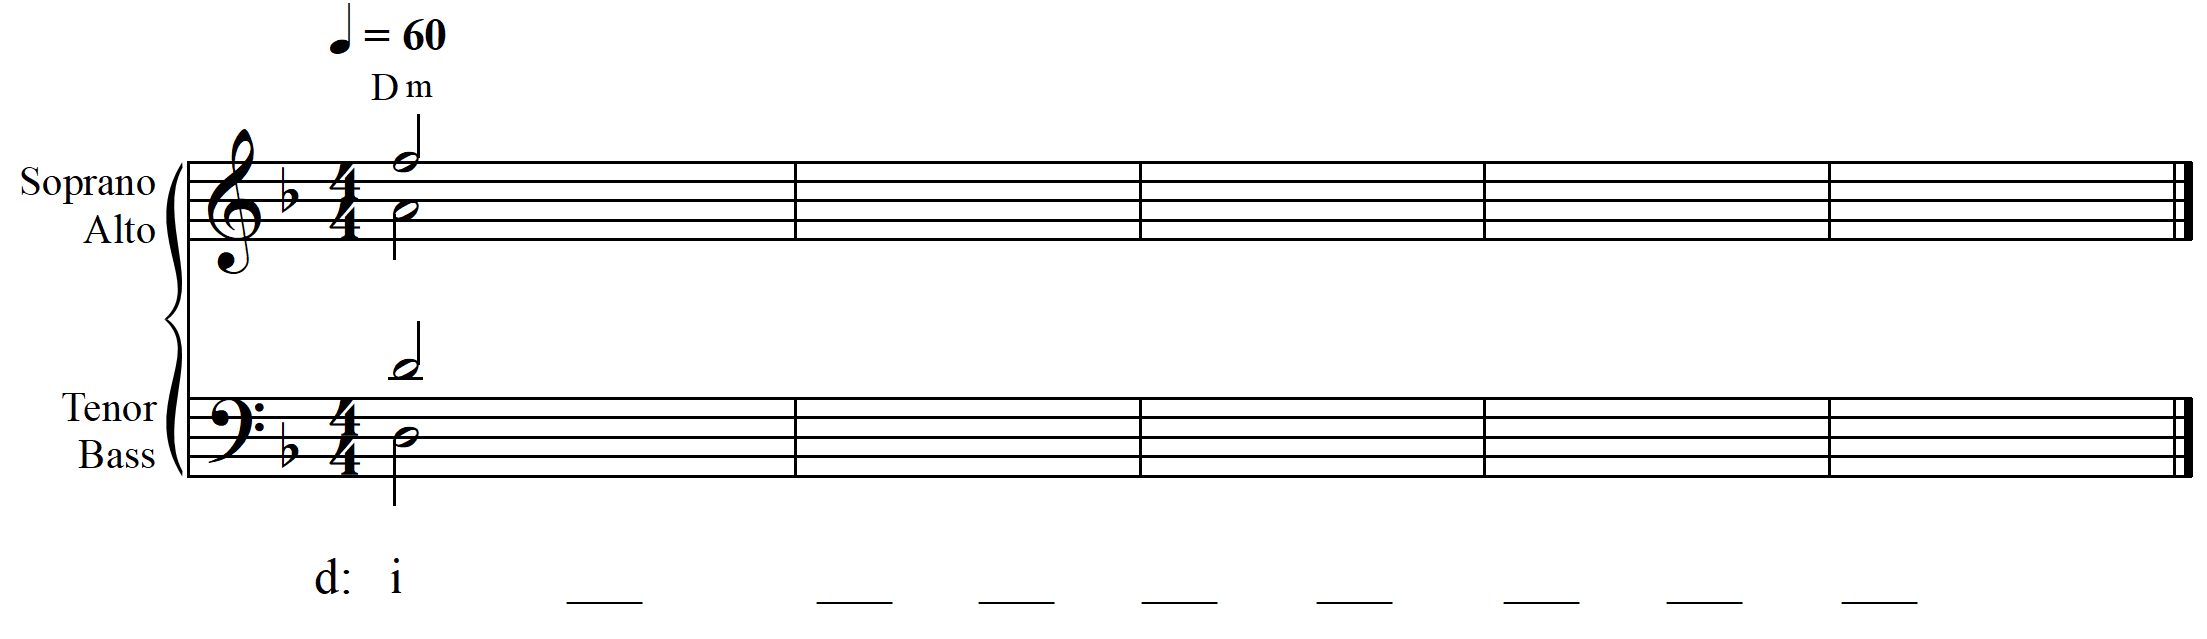 melodic dictation simple meter intermediate example 2 start